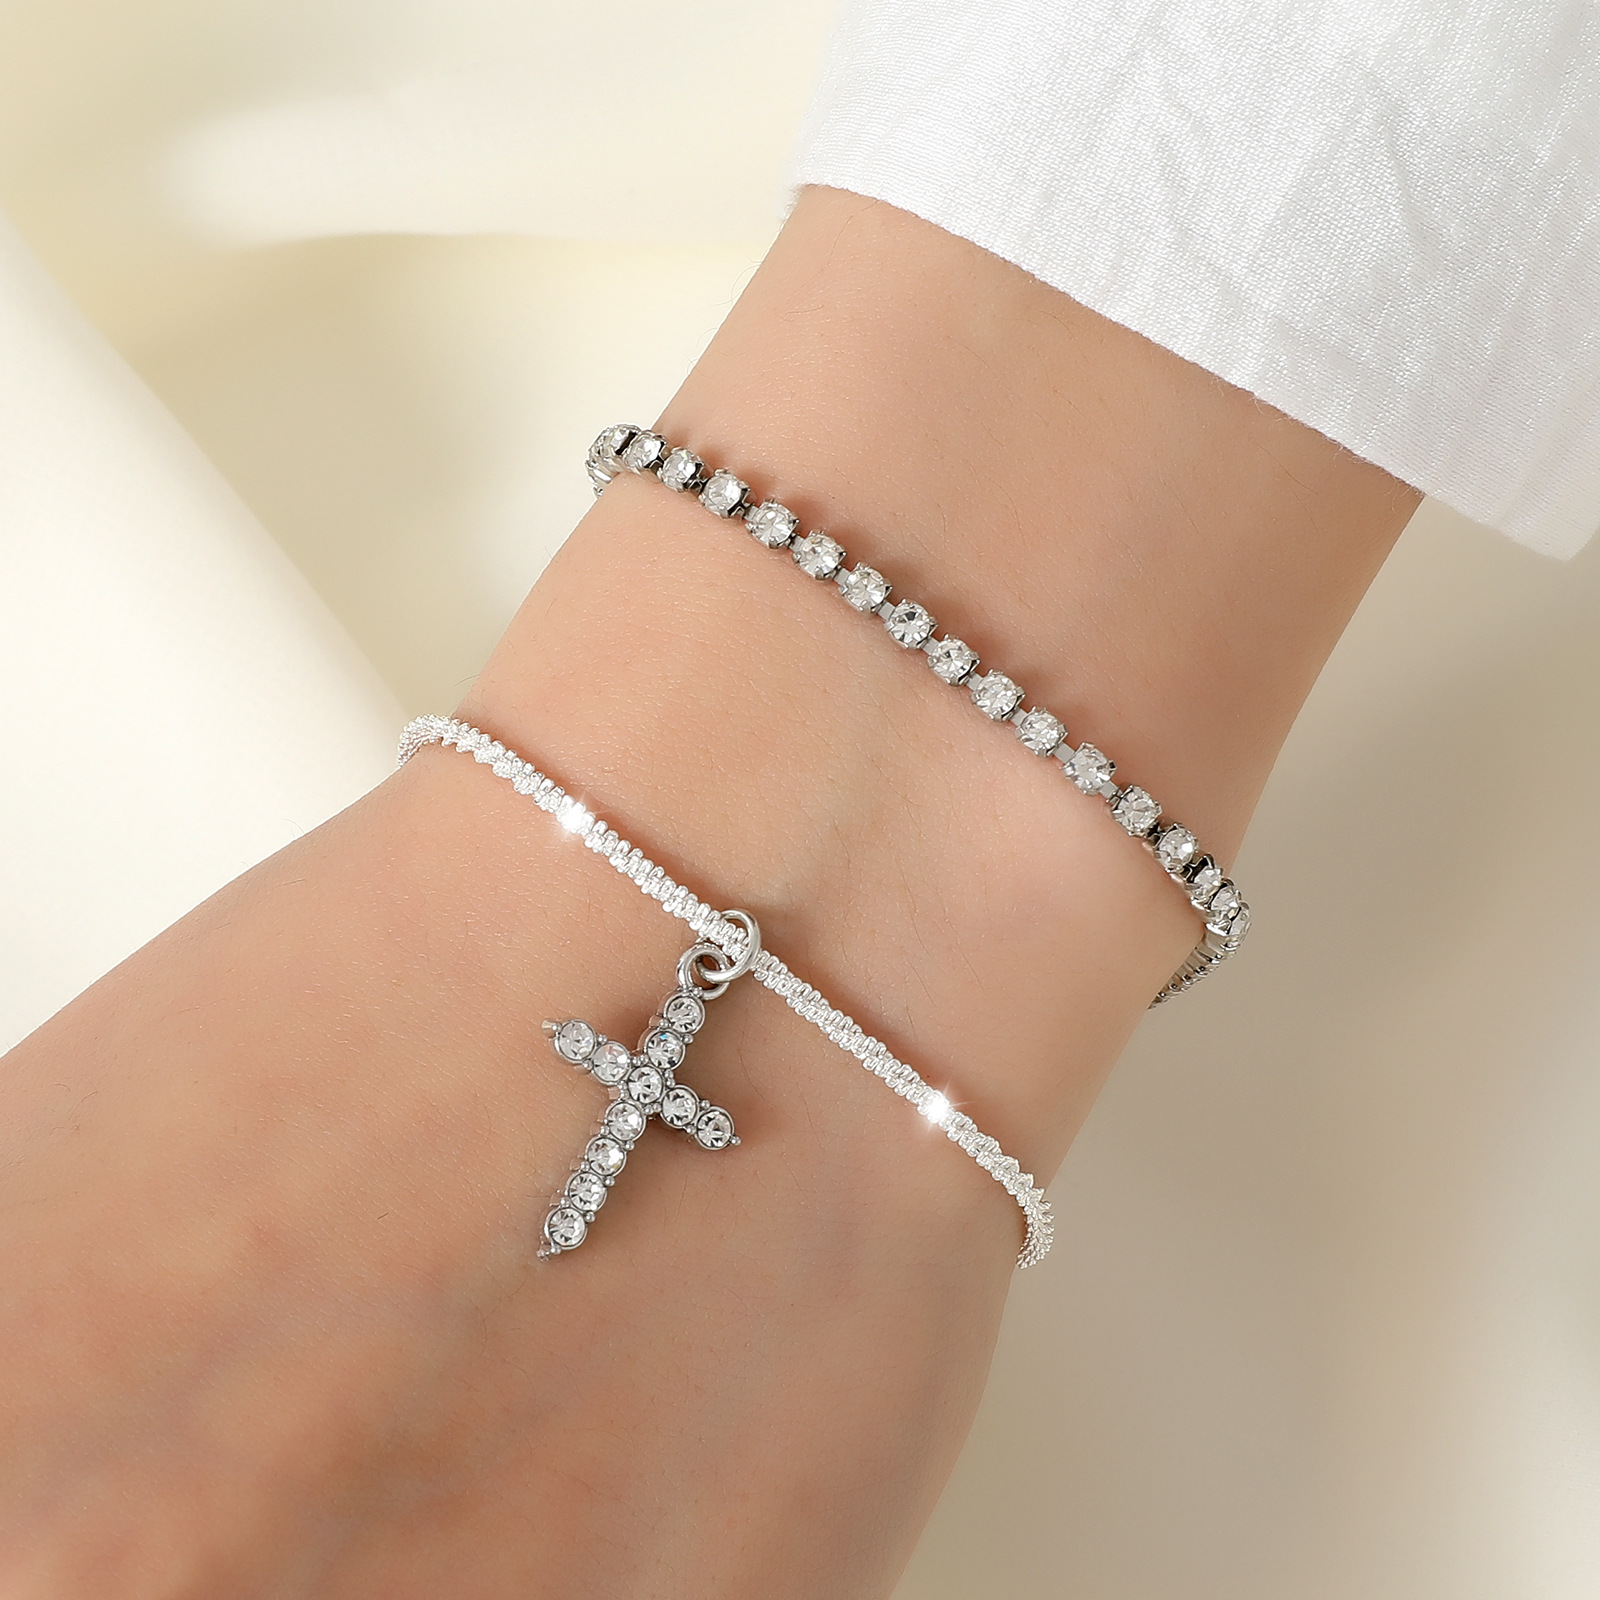 Claw chain - Silver bracelet